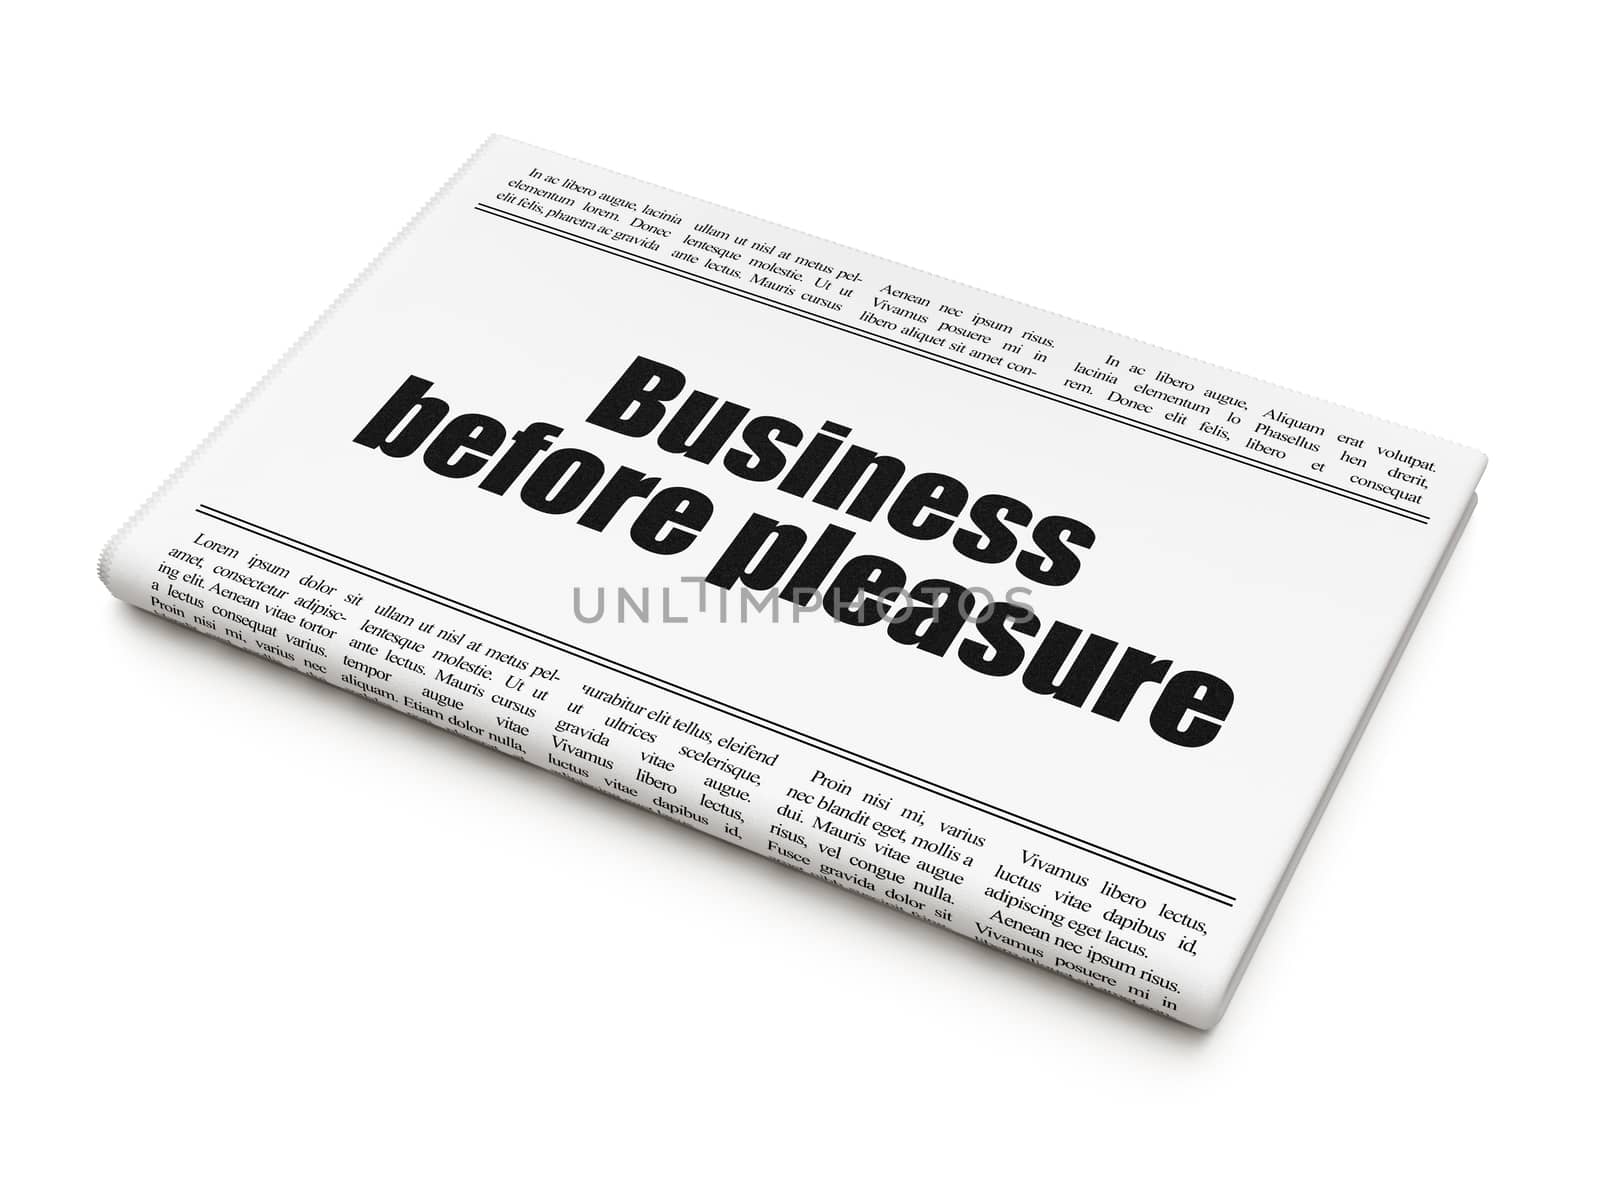 Finance concept: newspaper headline Business Before pleasure by maxkabakov